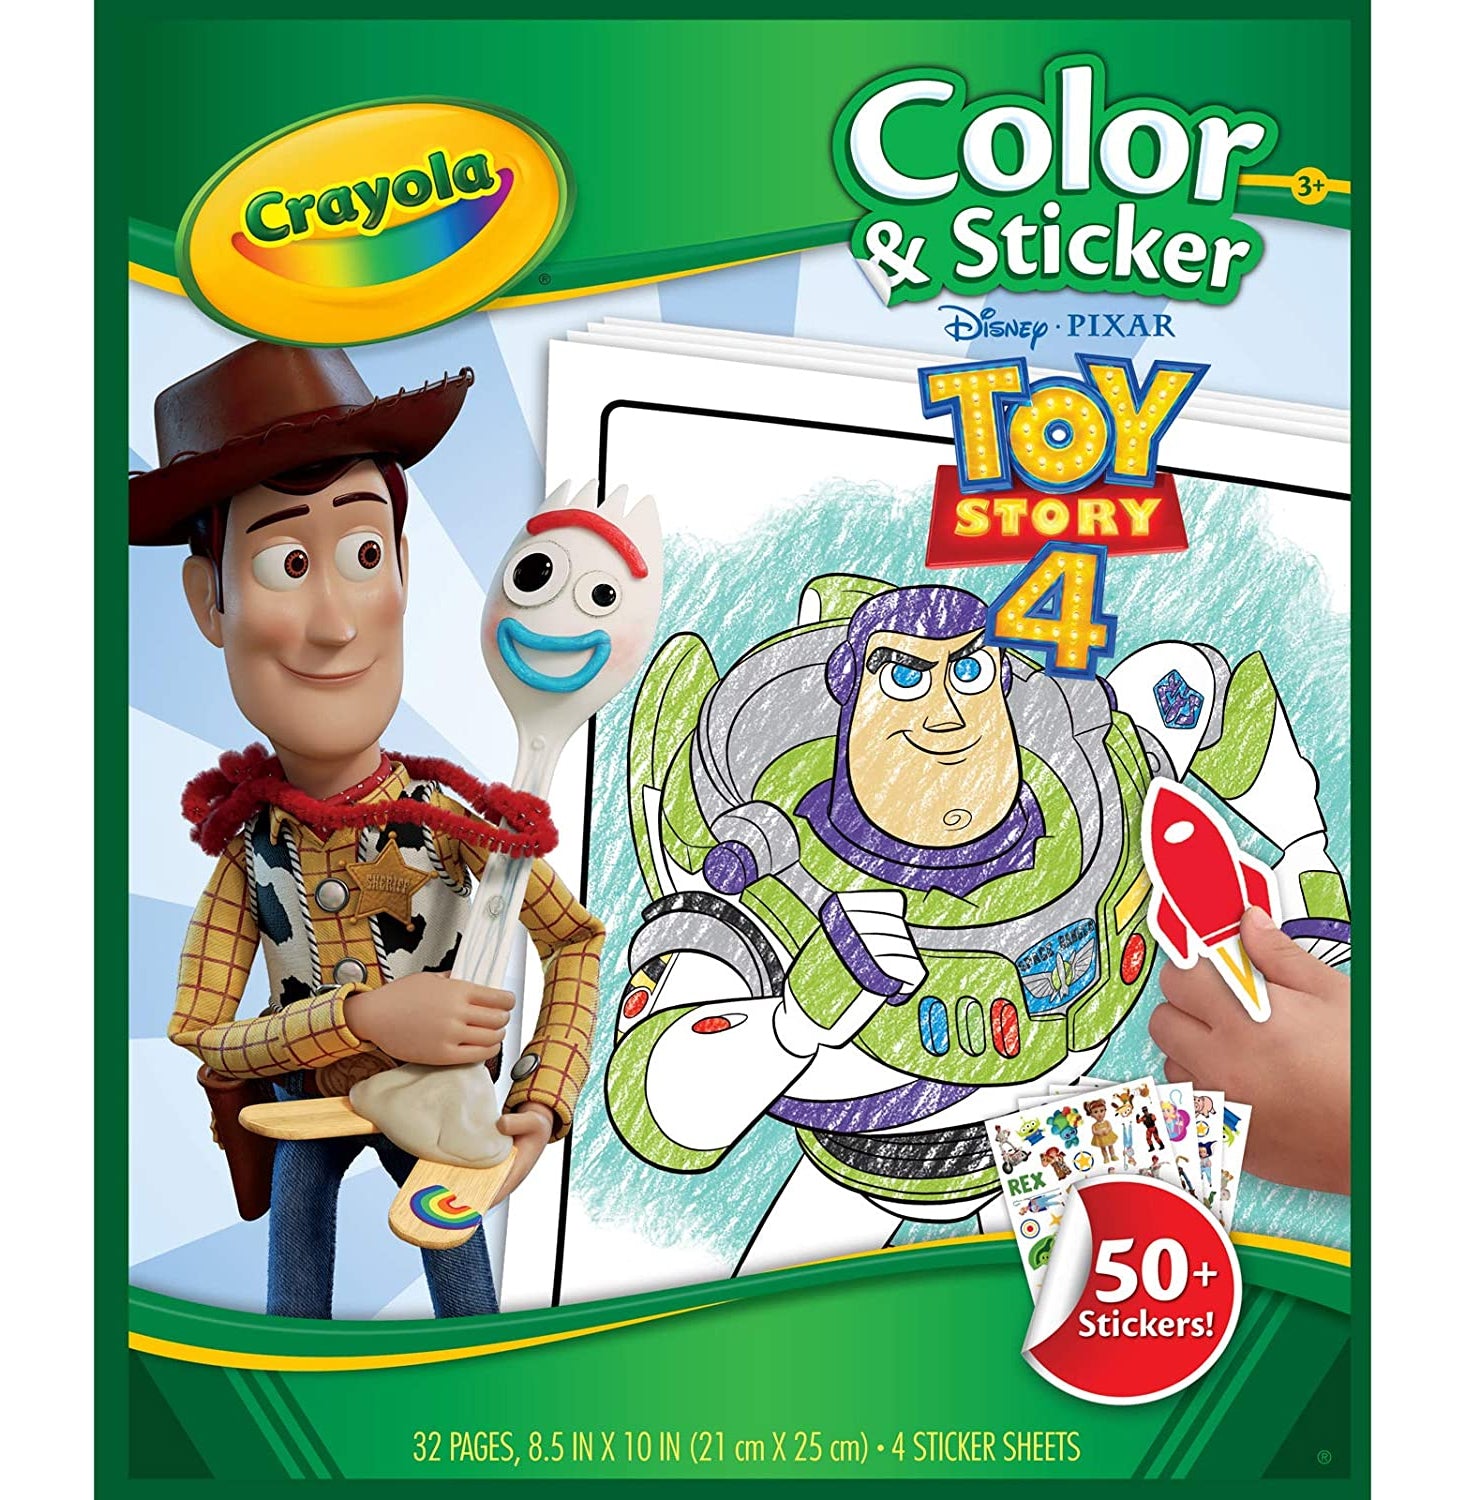 Crayola Toy Story 4 Color Sticker